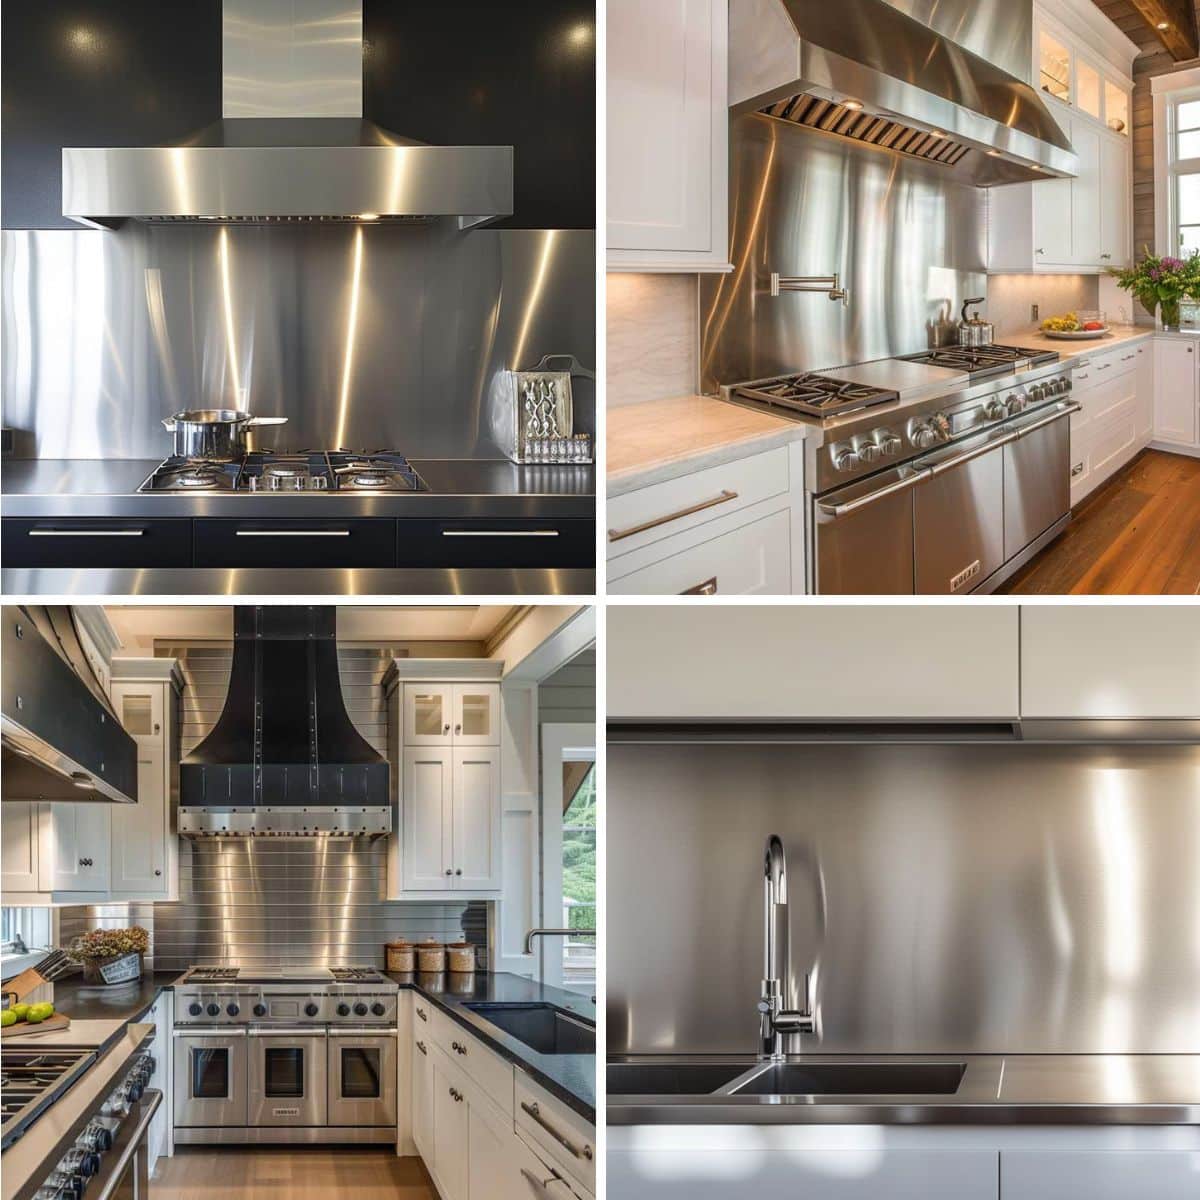 different kitchen designs with stainless steel backsplashes